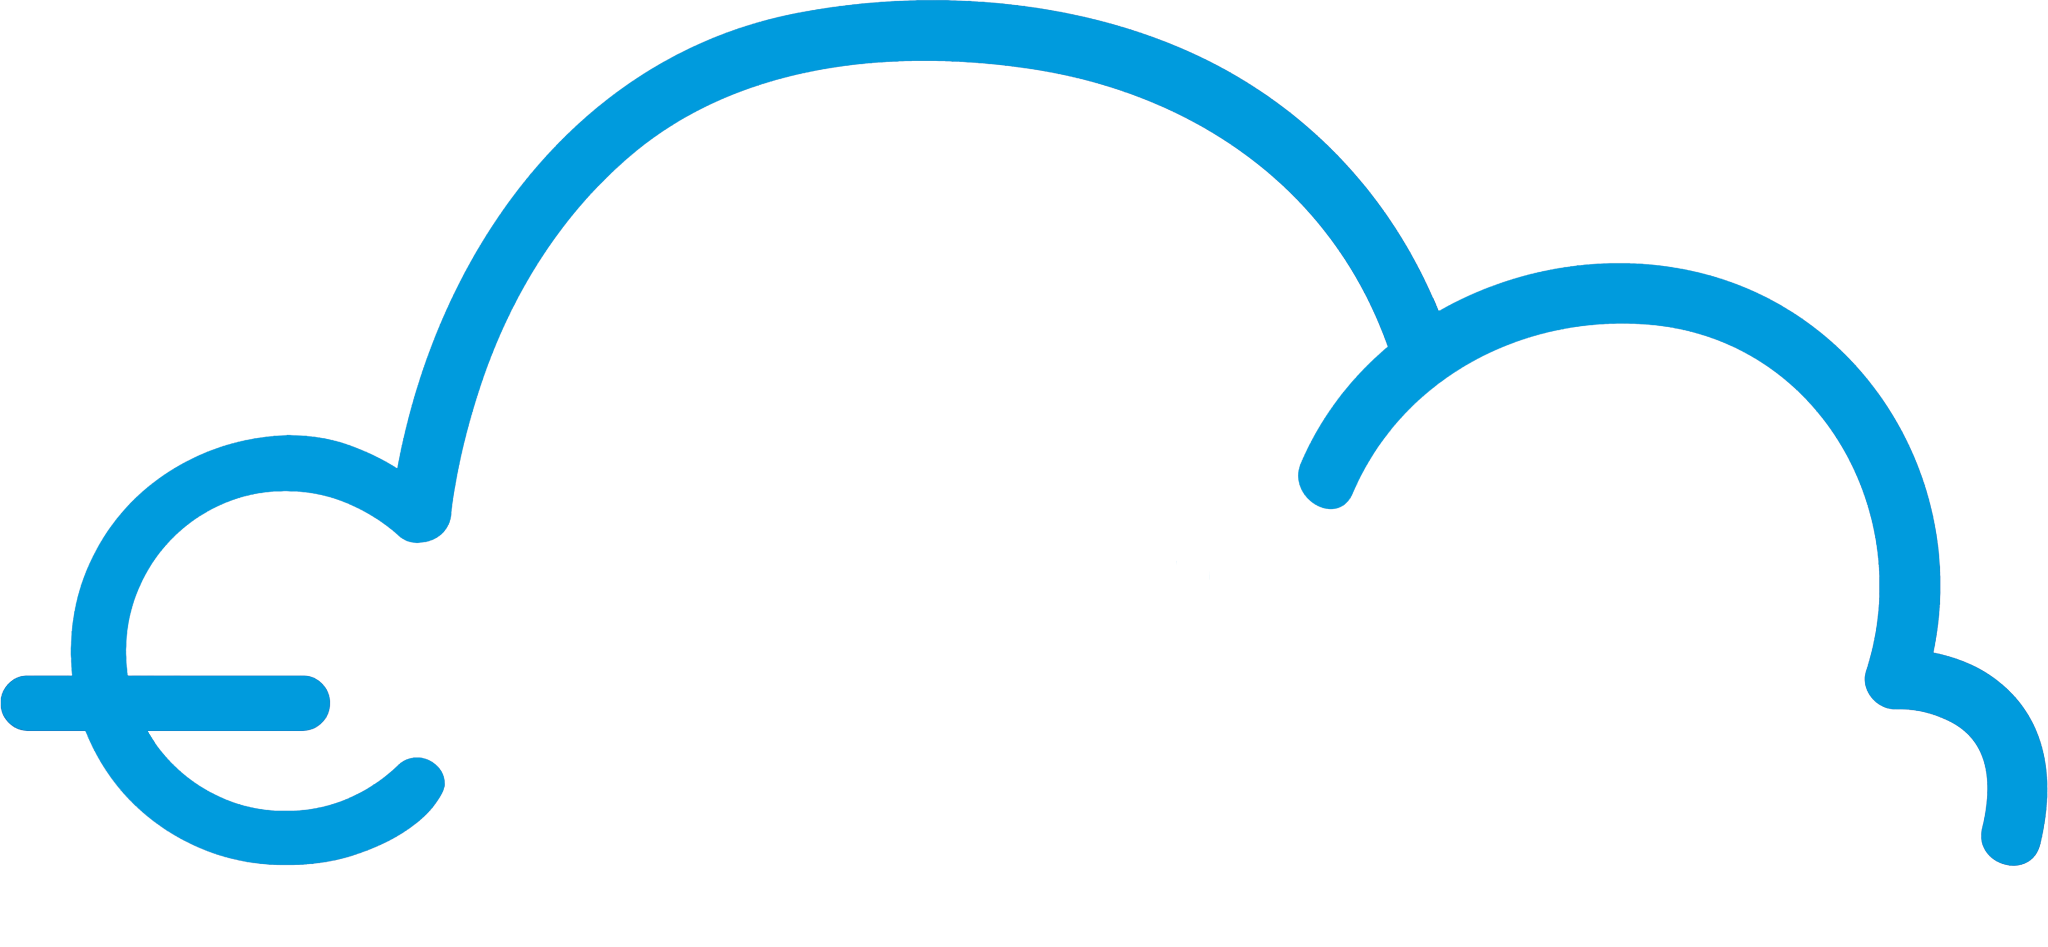 eym outlined logo